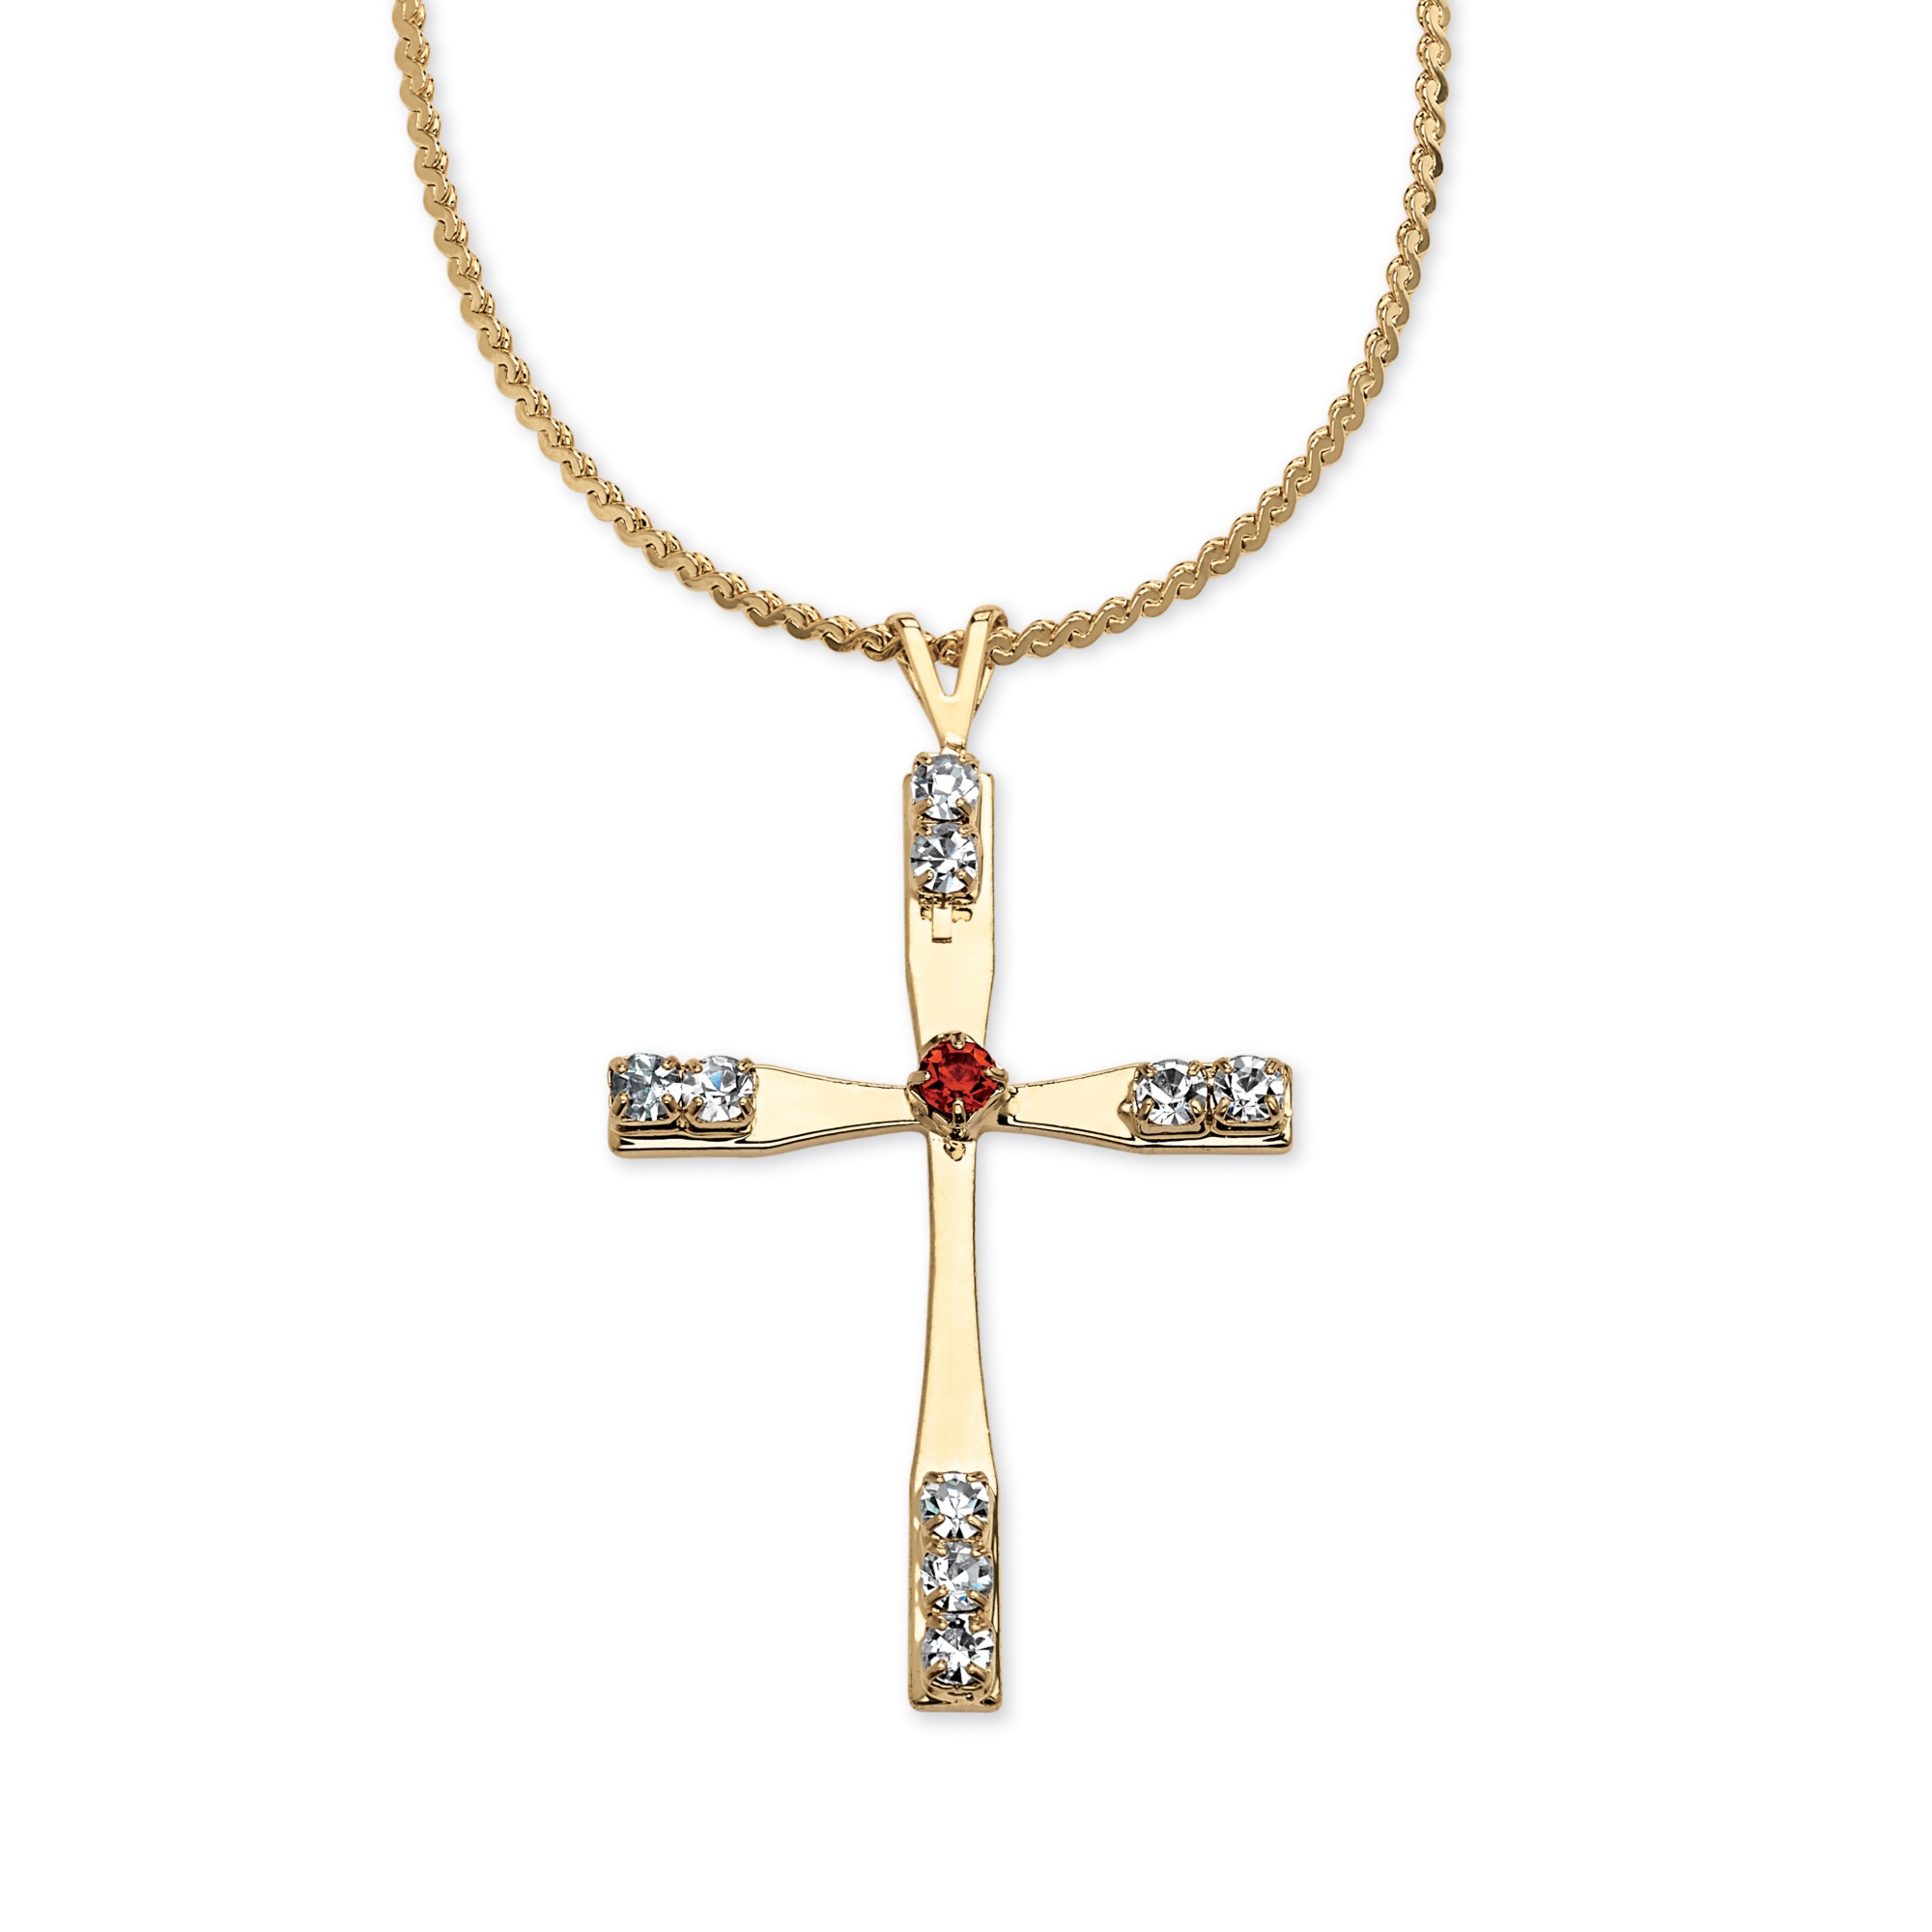 PalmBeach Jewelry Birthstone Cross Necklace in Yellow Gold Tone